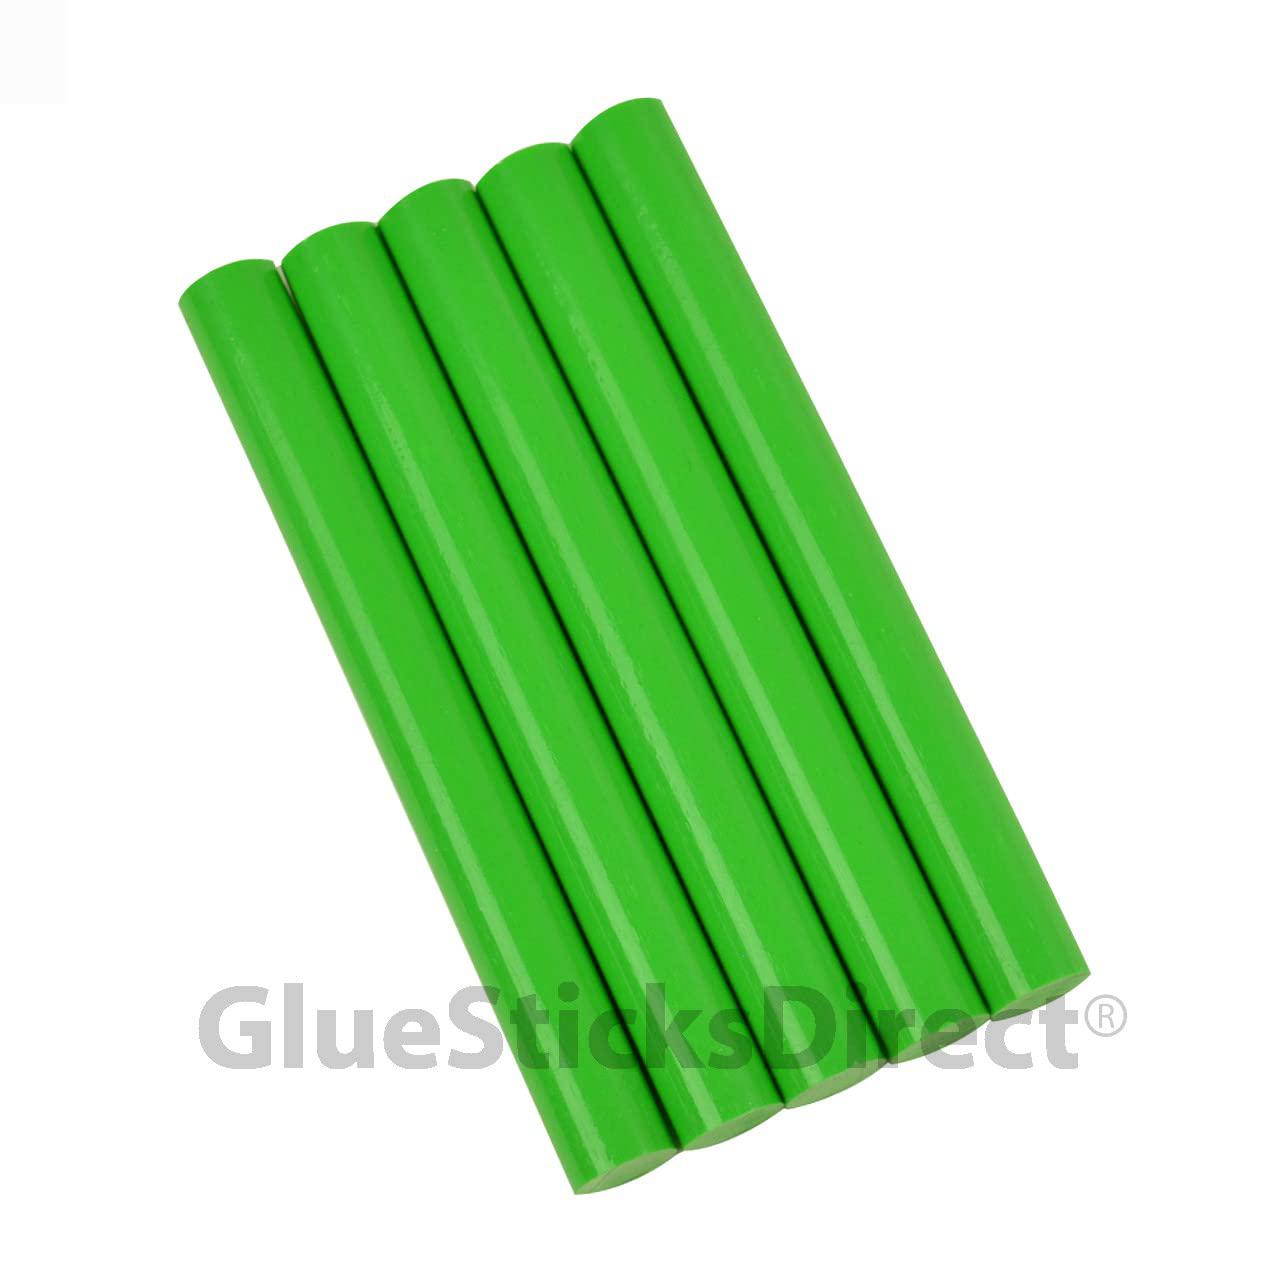 GlueSticksDirect.com gluesticksdirect mint green colored glue sticks for hot, cool and dual temp glue guns, large bulk 5 lb box - 7/16" x 4"